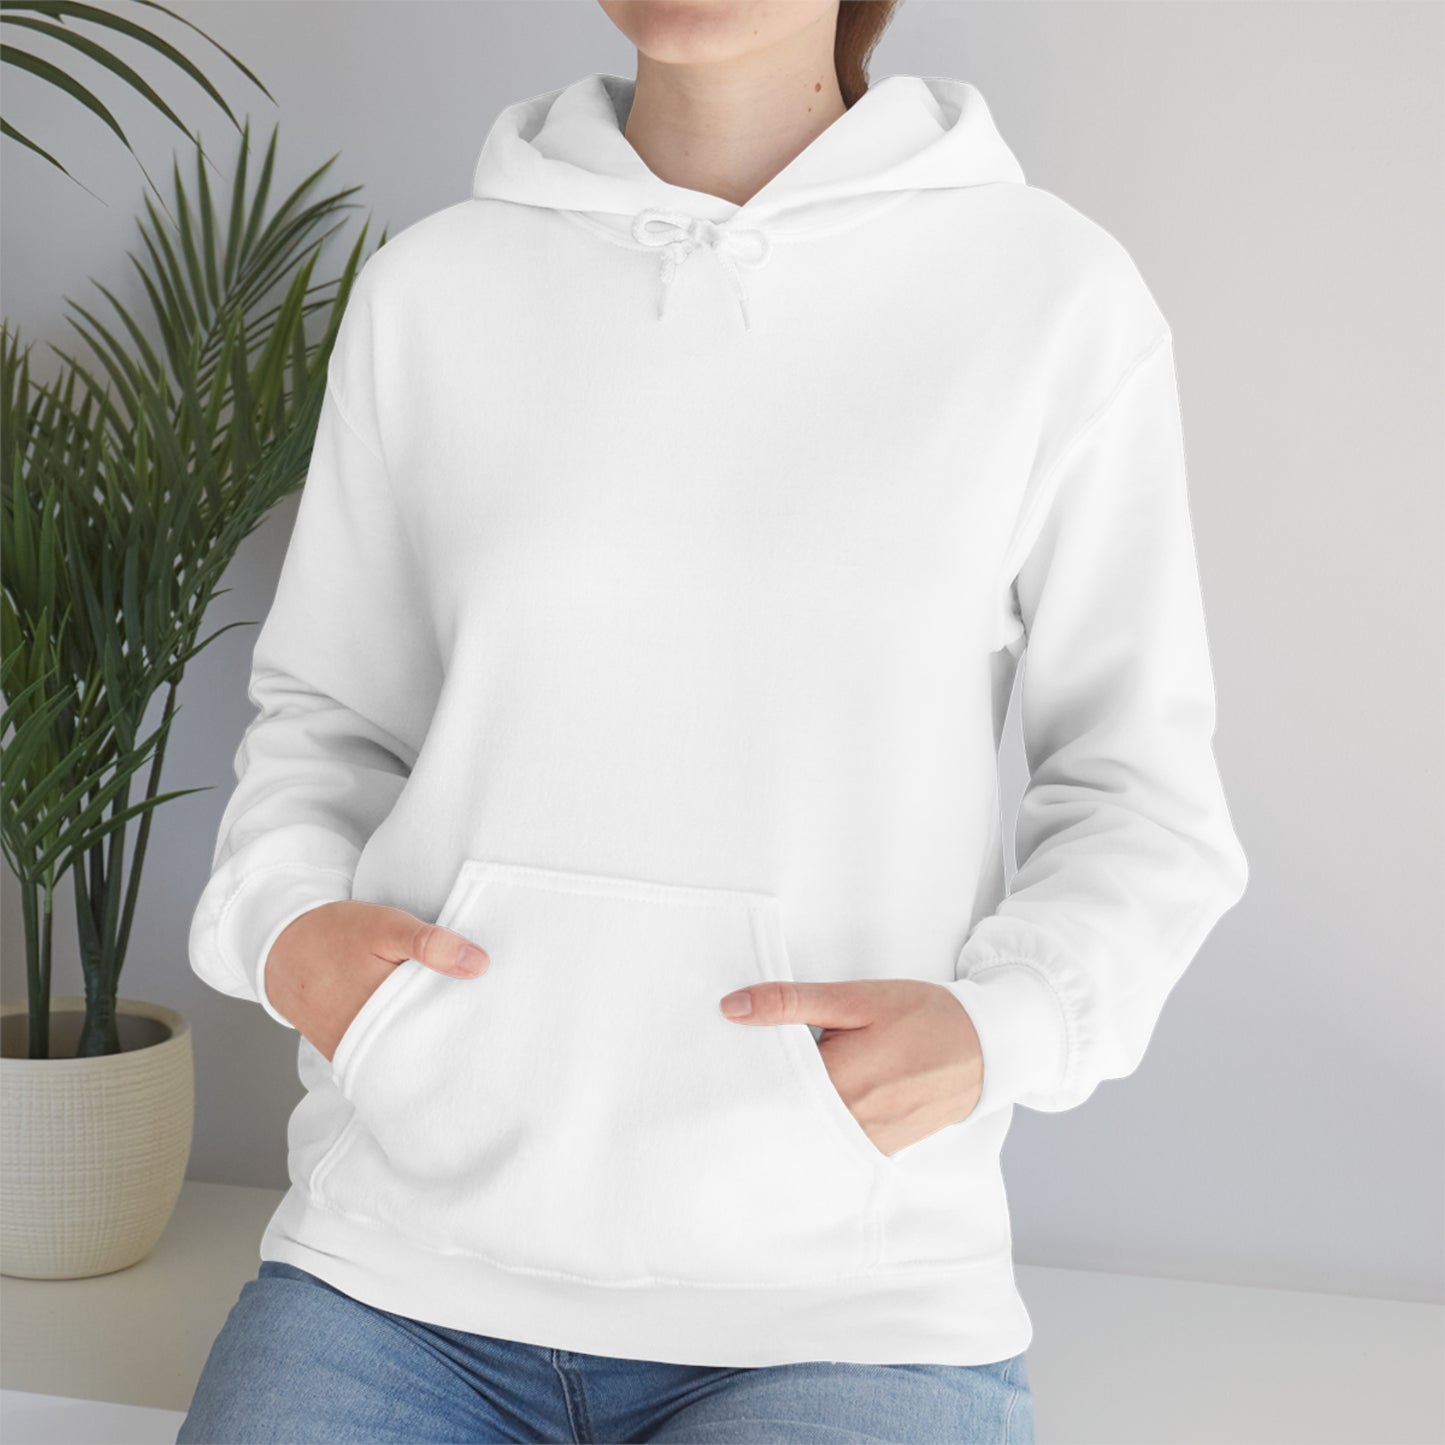 "White Pants 1 Mom 0" Hooded Sweatshirt